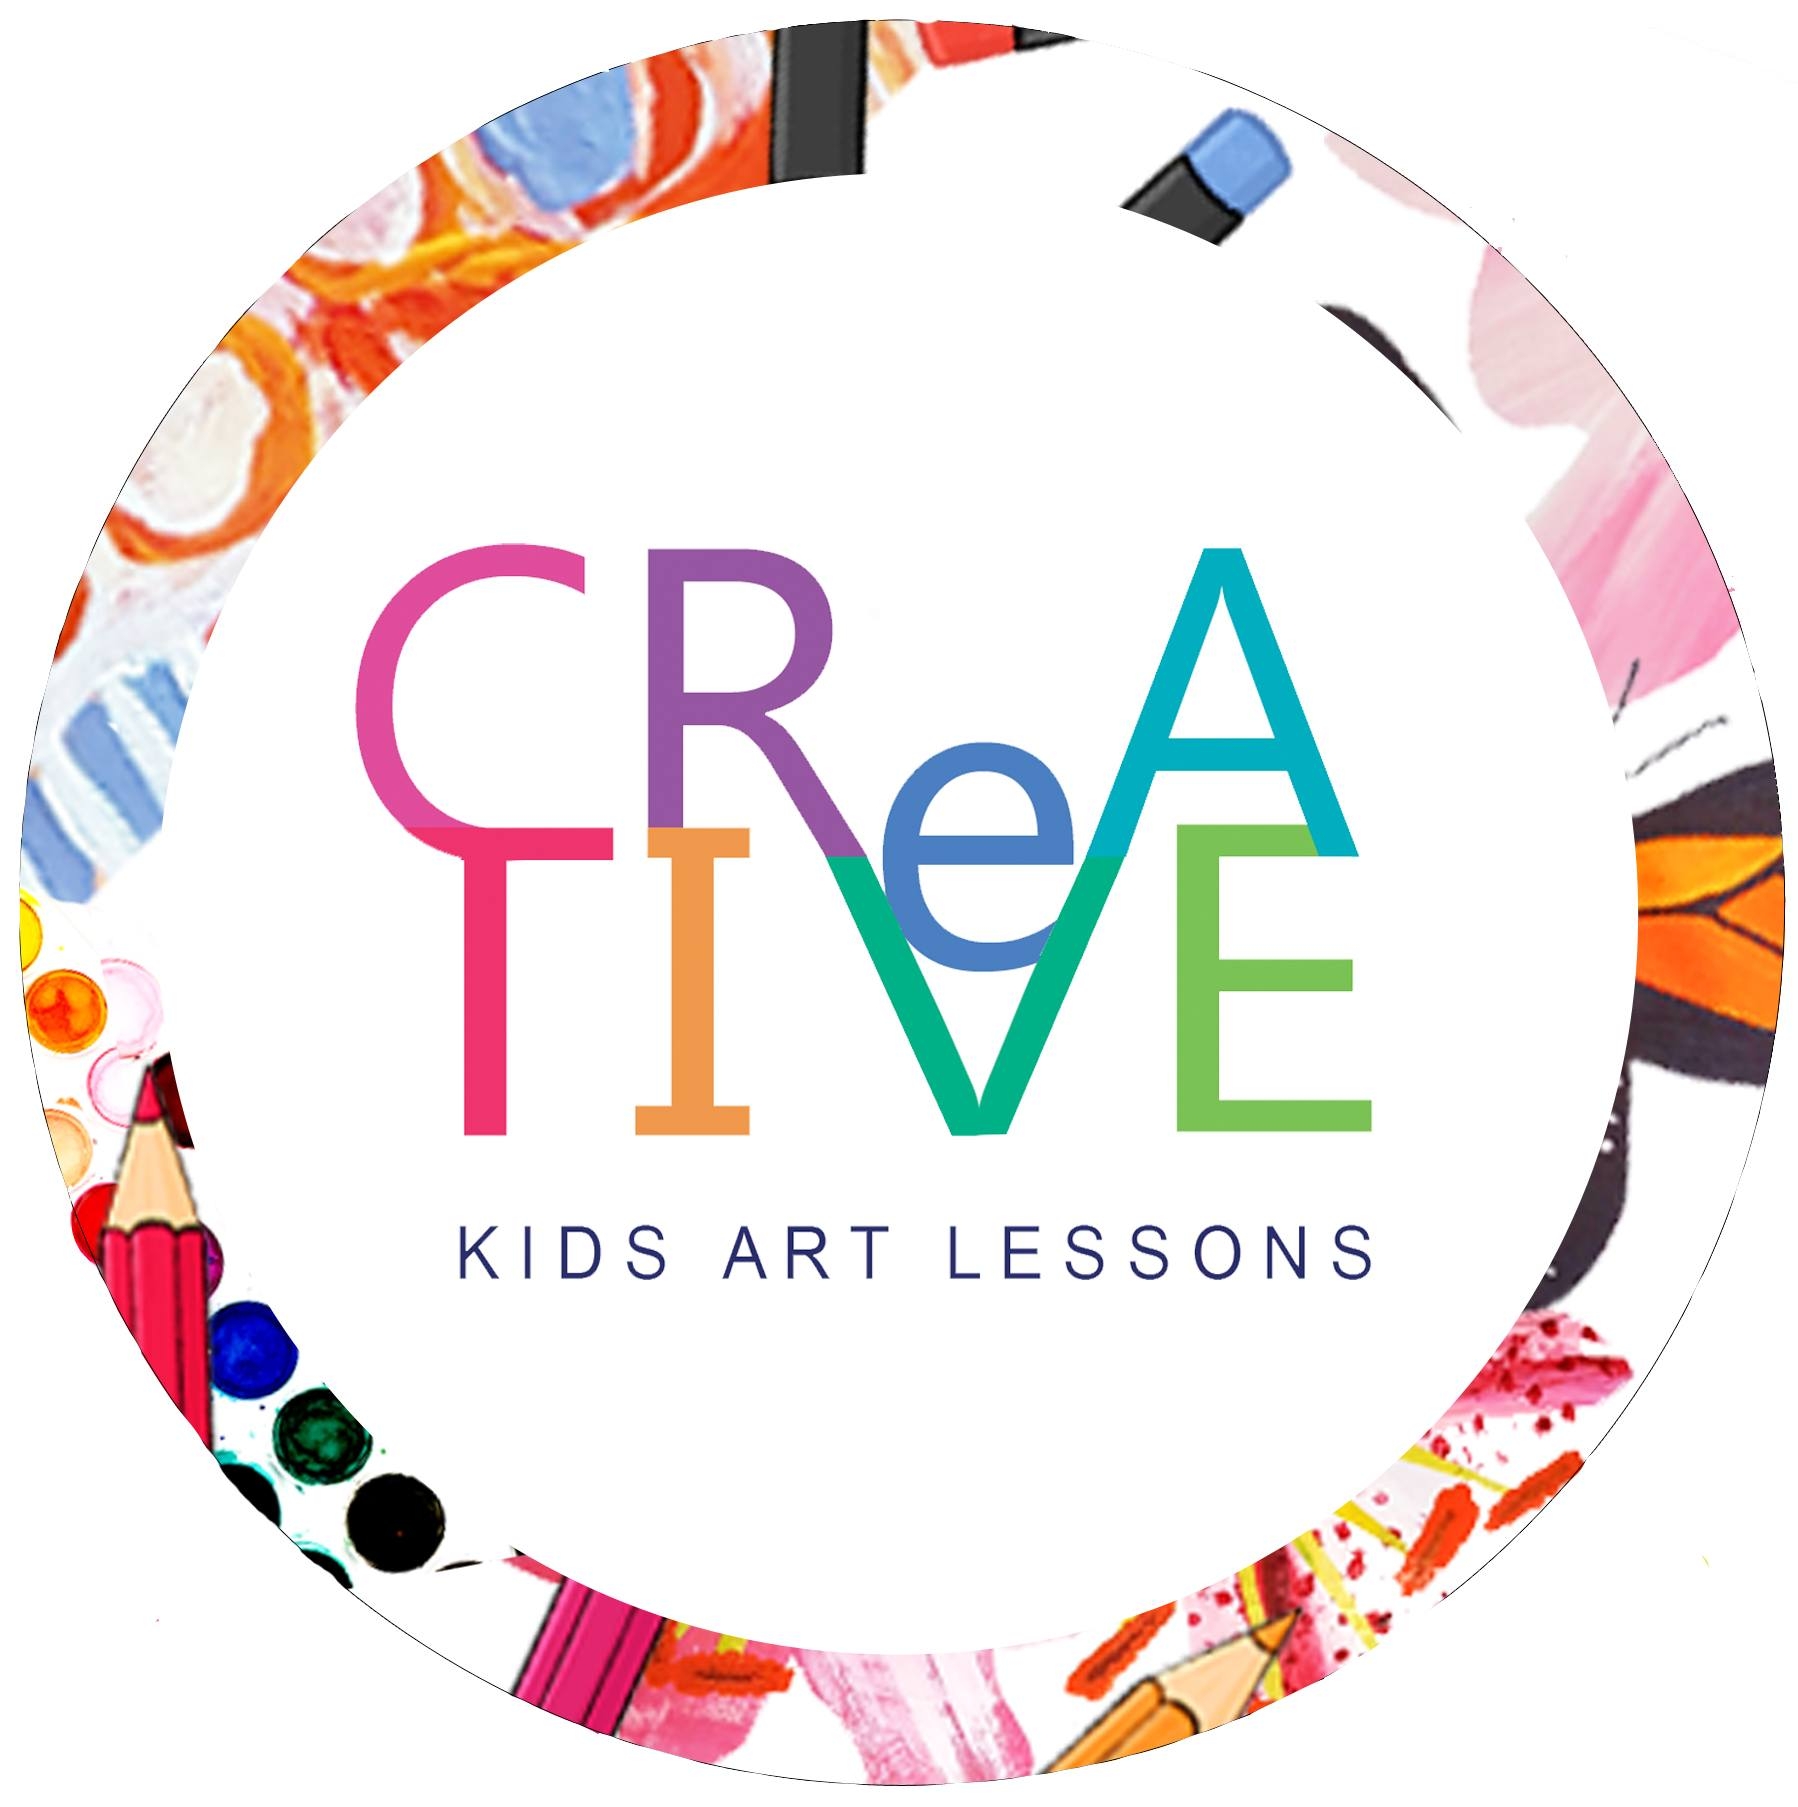 Art Lessons for Art Teachers, created by Teachers